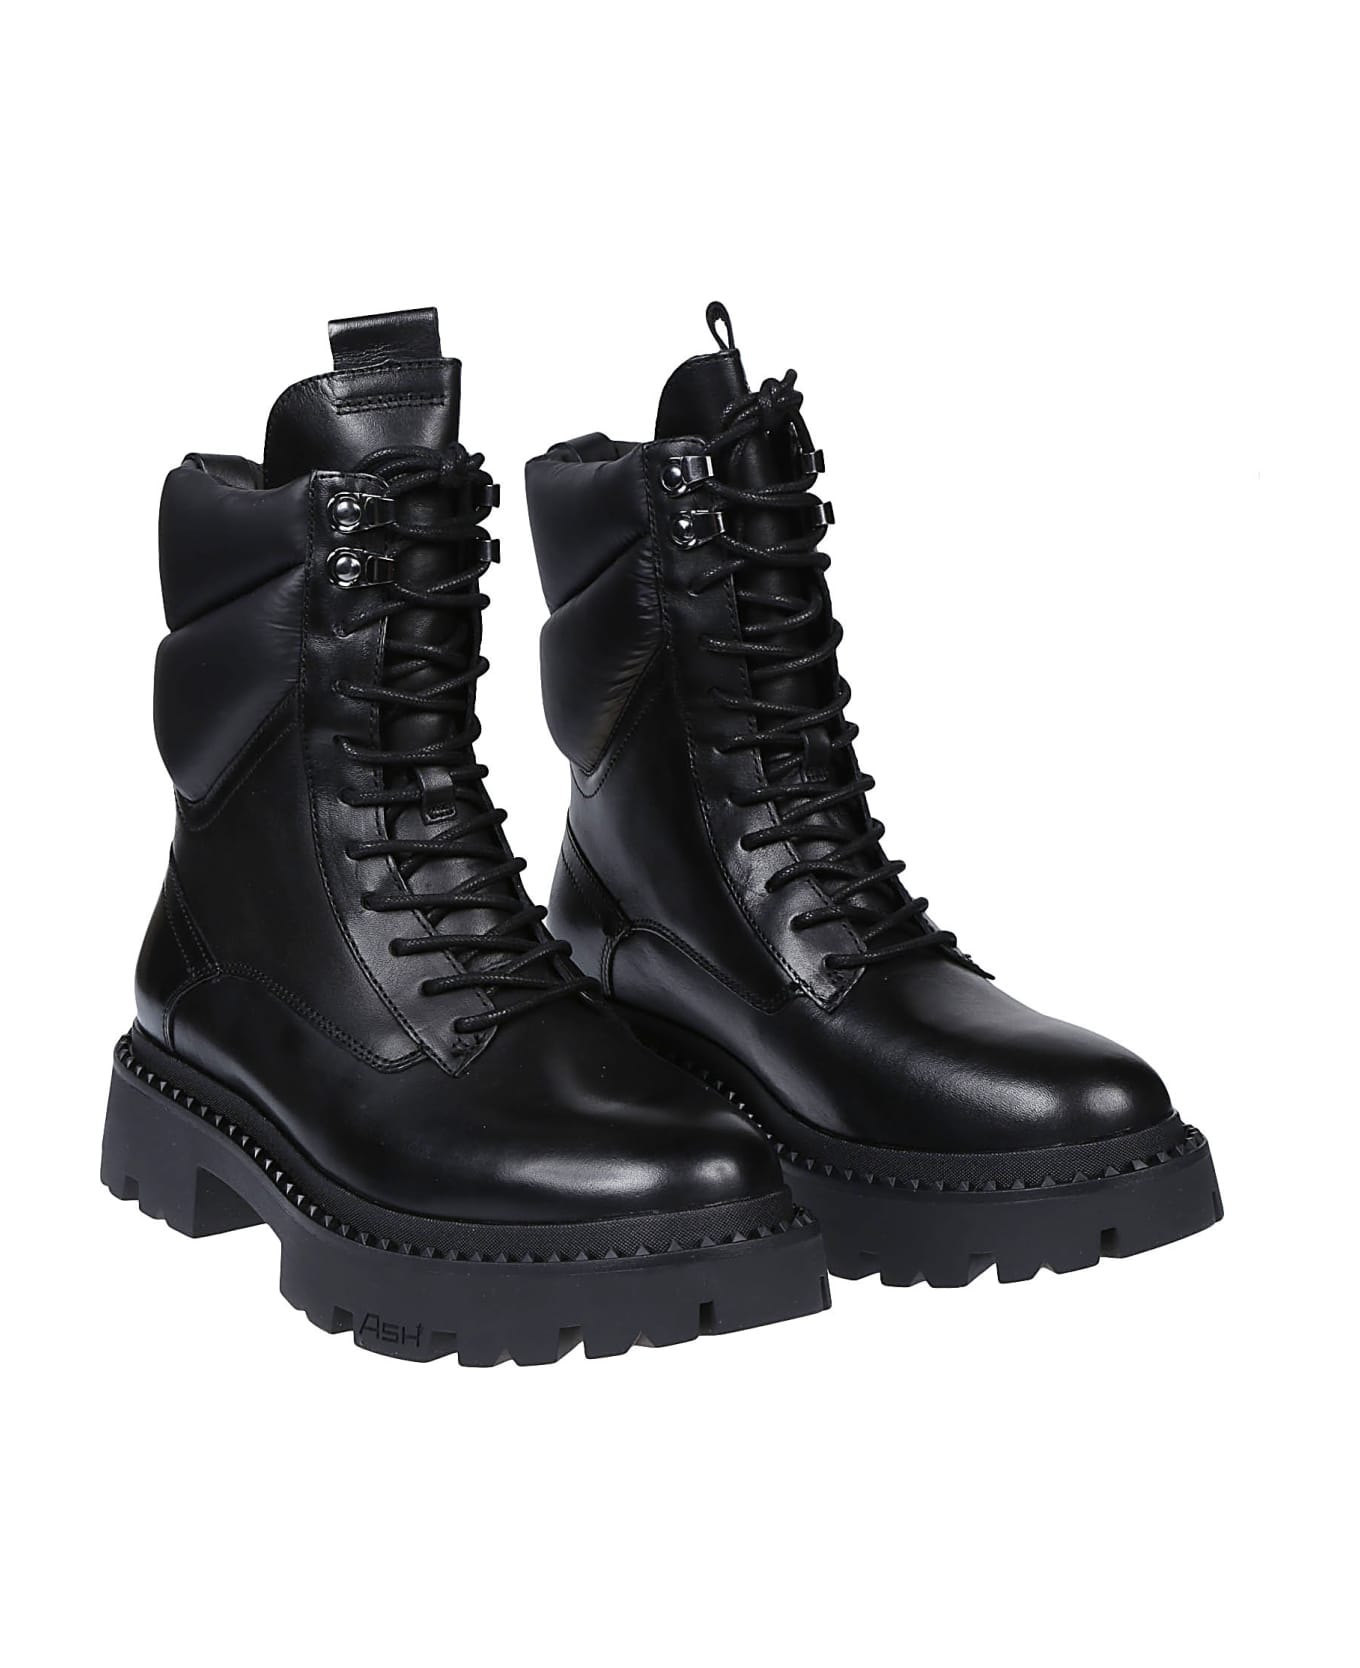 Ash Gotta Combat Ankle Boots - Black/shinypuffy Black